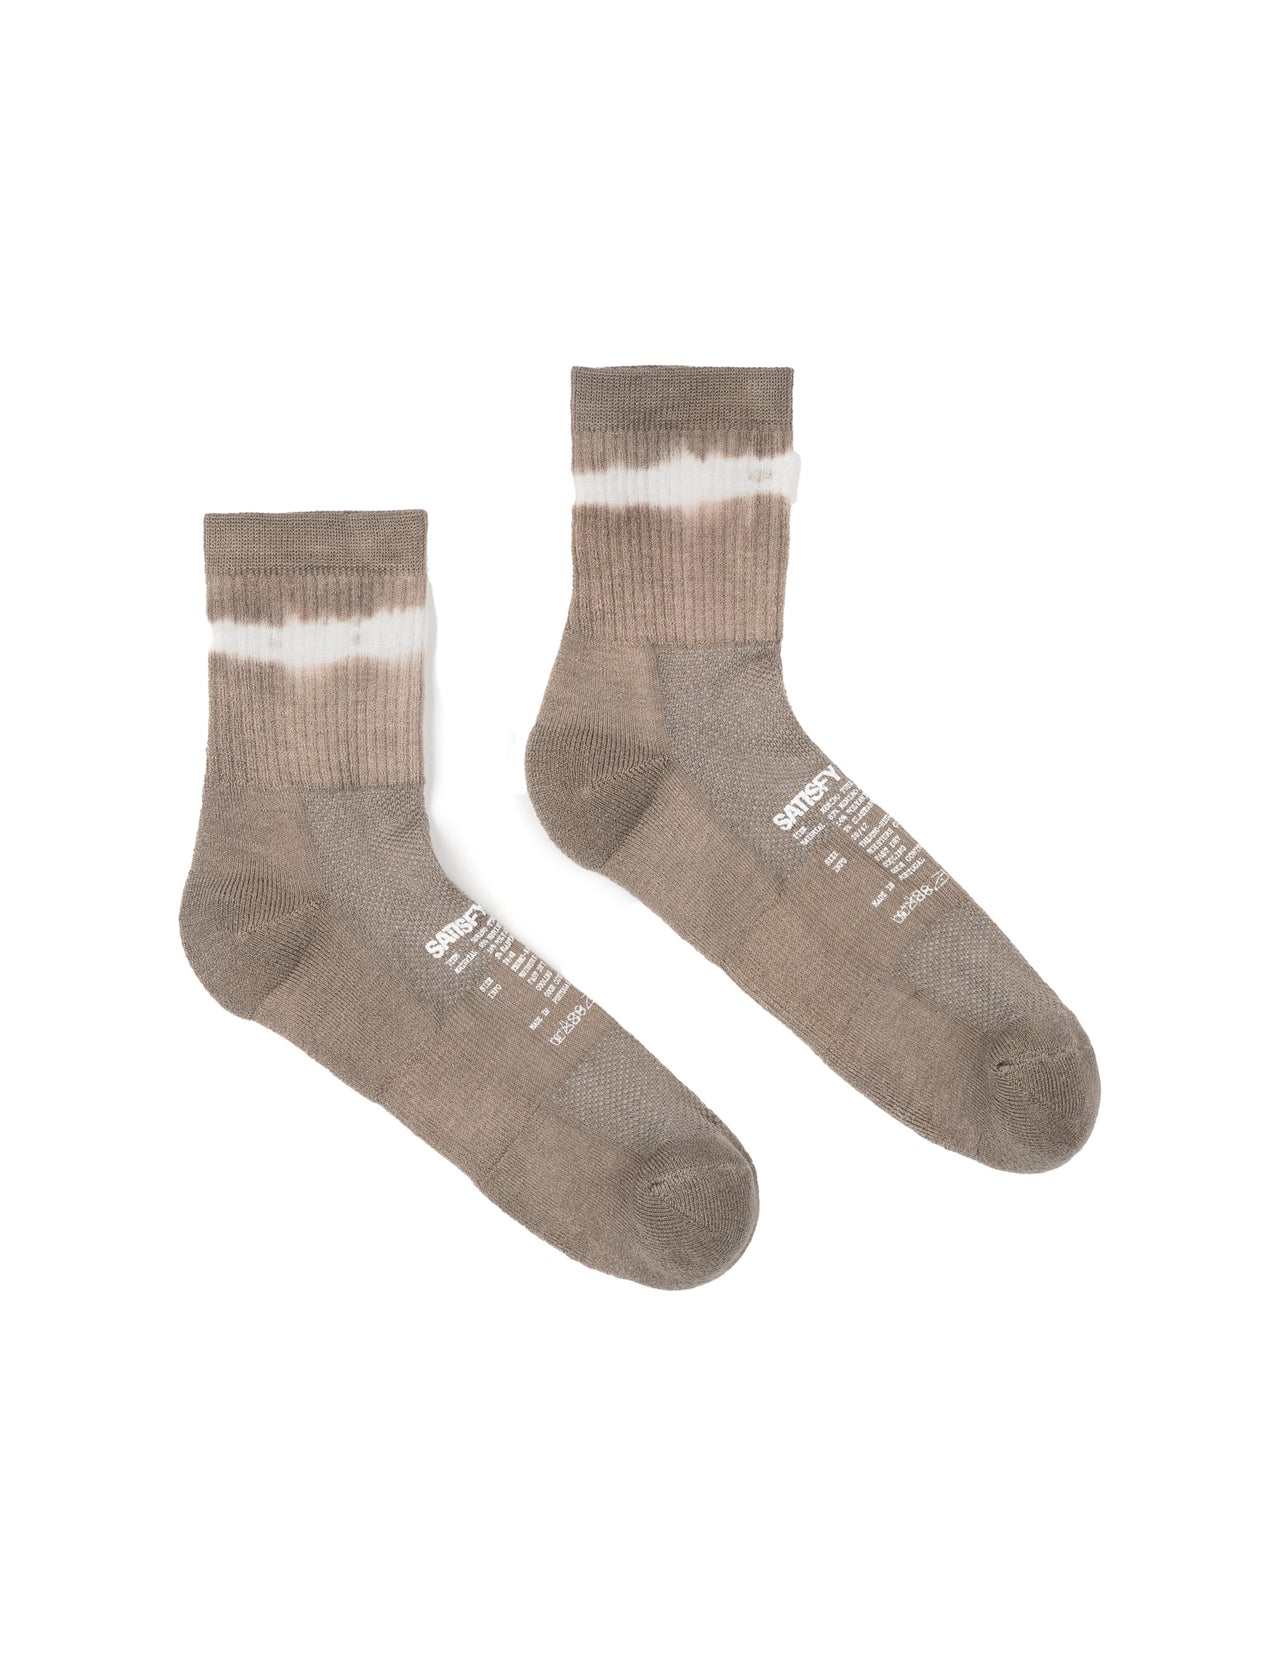 Merino Tube Socks in Greige Tye-Dye